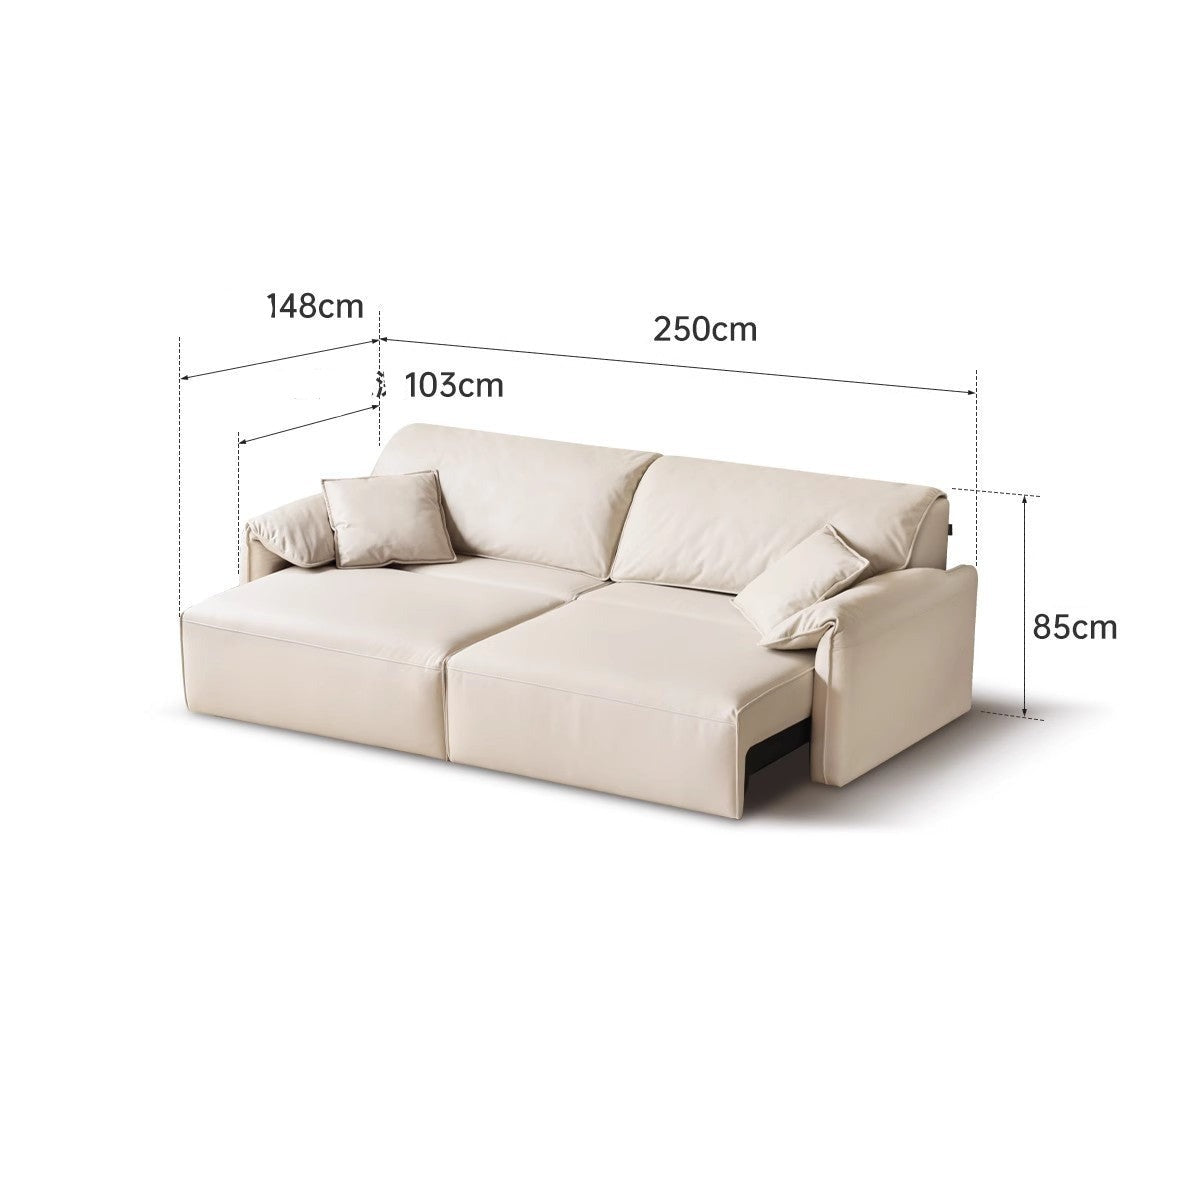 Electric sofa bed foldable dual-purpose cream style white elephant ear retractable sofa+